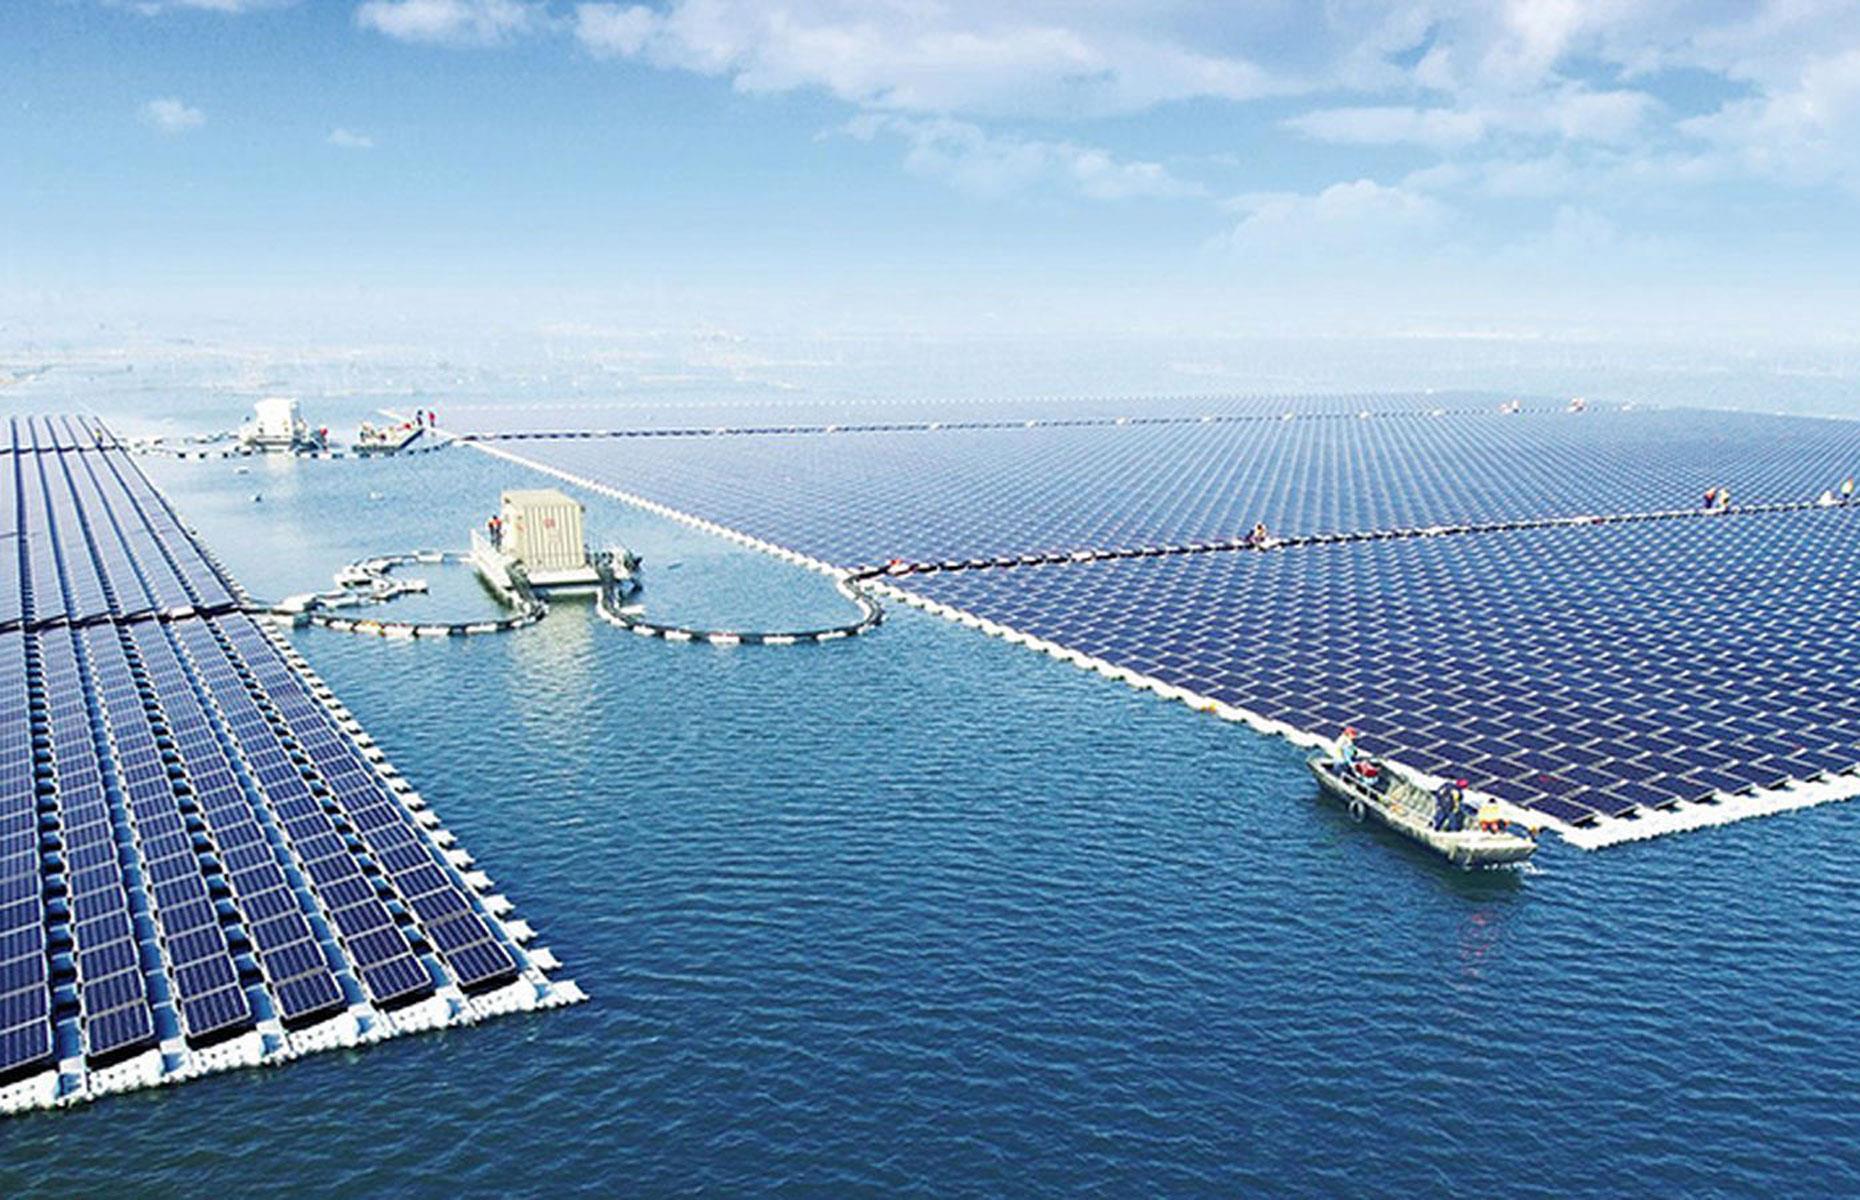 World's largest floating solar power plant